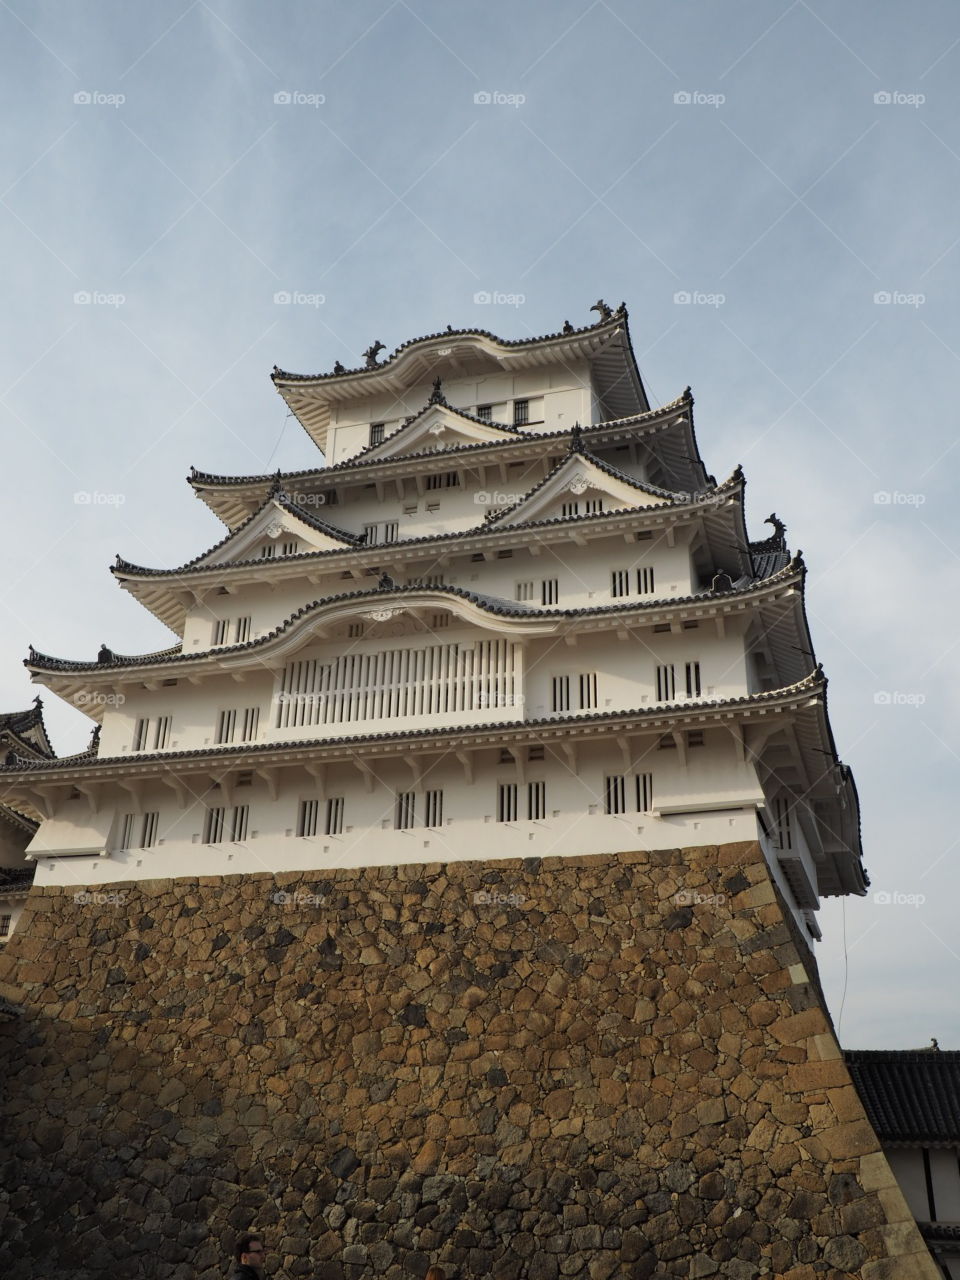 Himeji castle in japan 